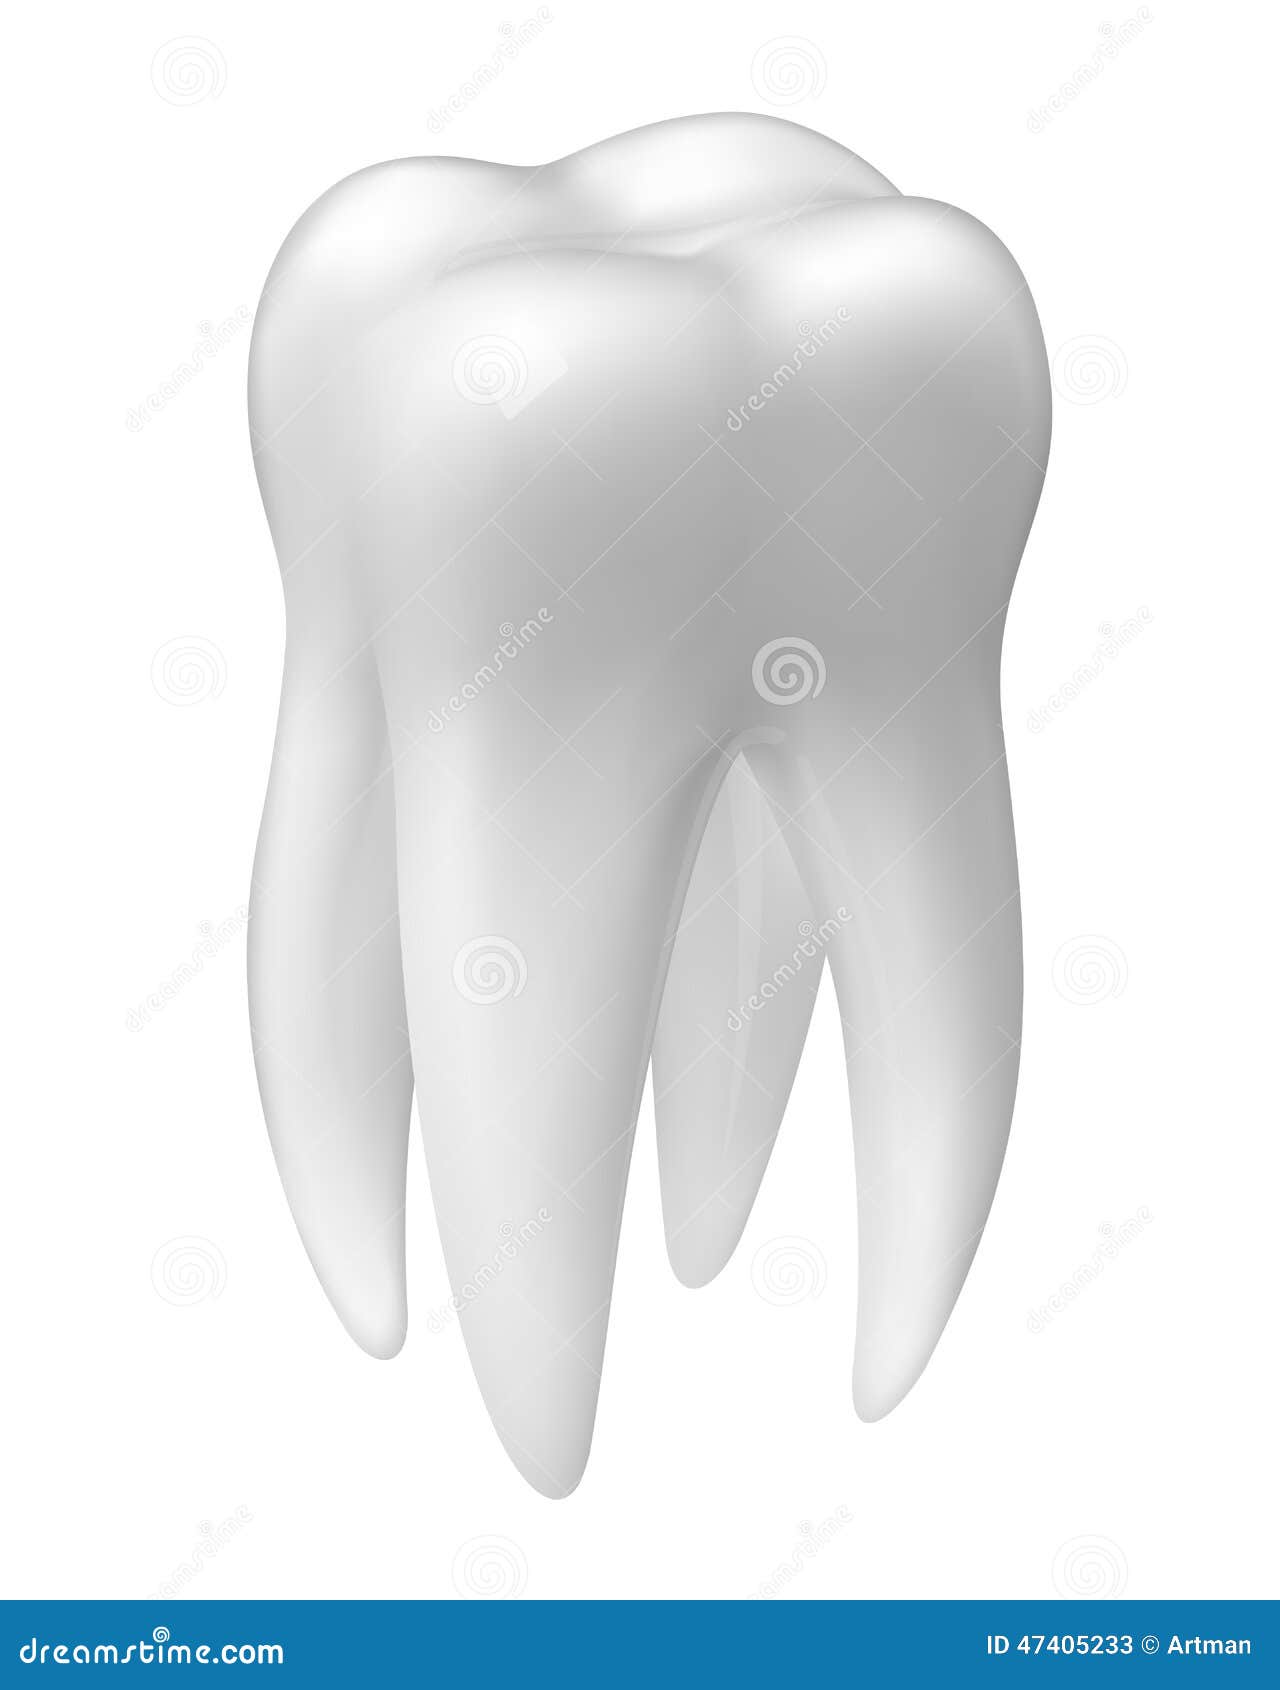  molar tooth icon